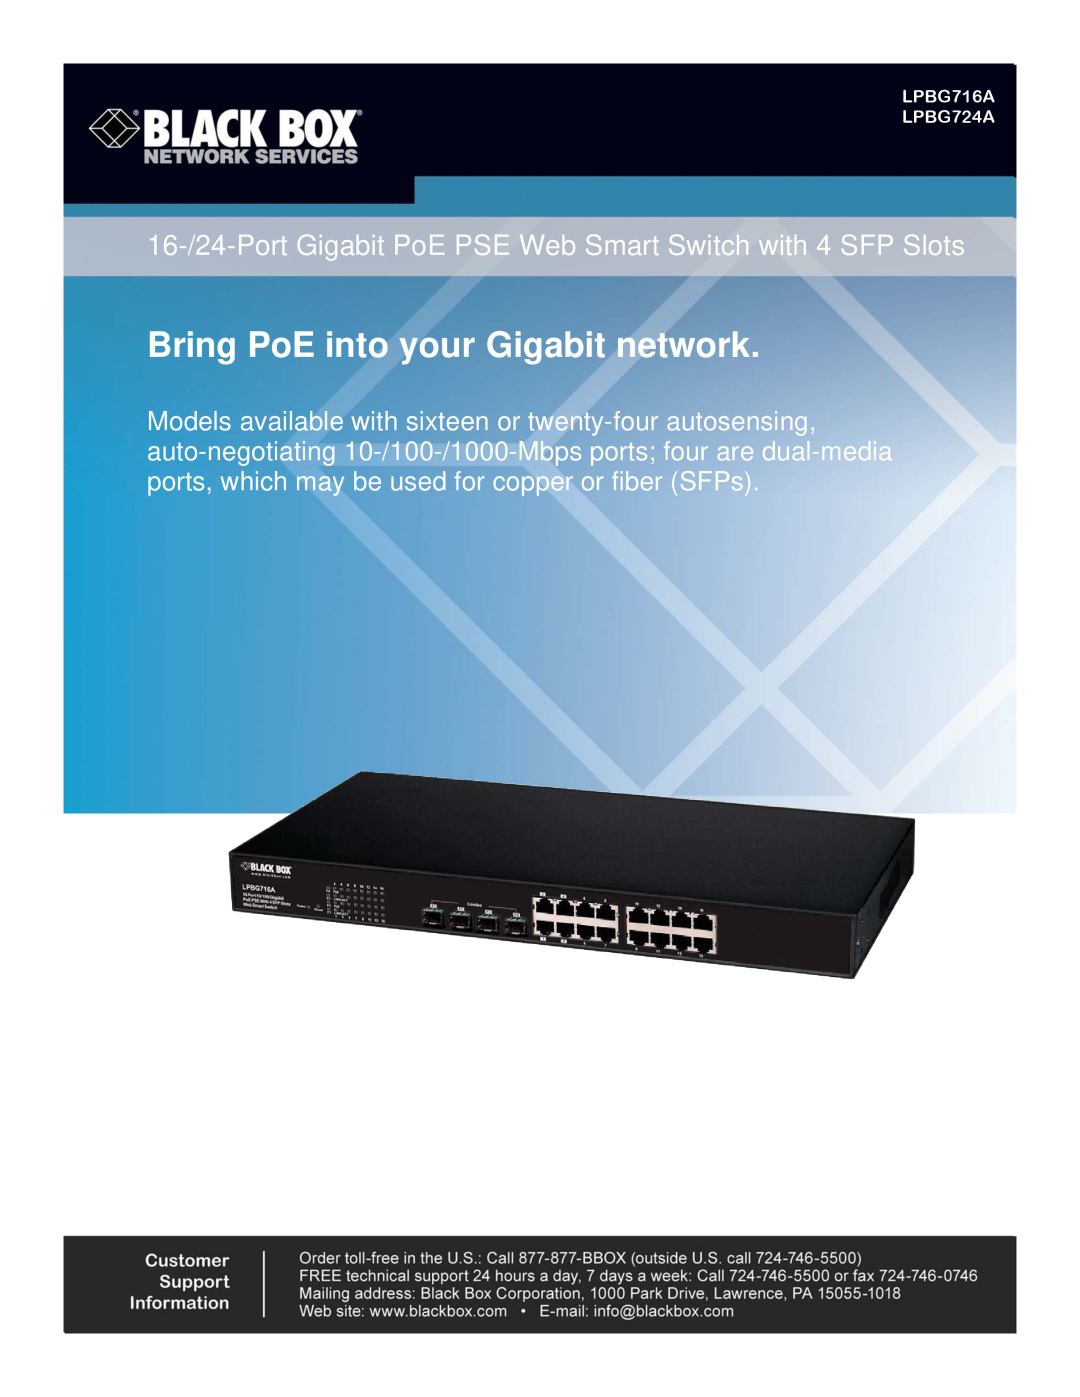 Black Box manual Bring PoE into your Gigabit network, LPBG716A LPBG724A 